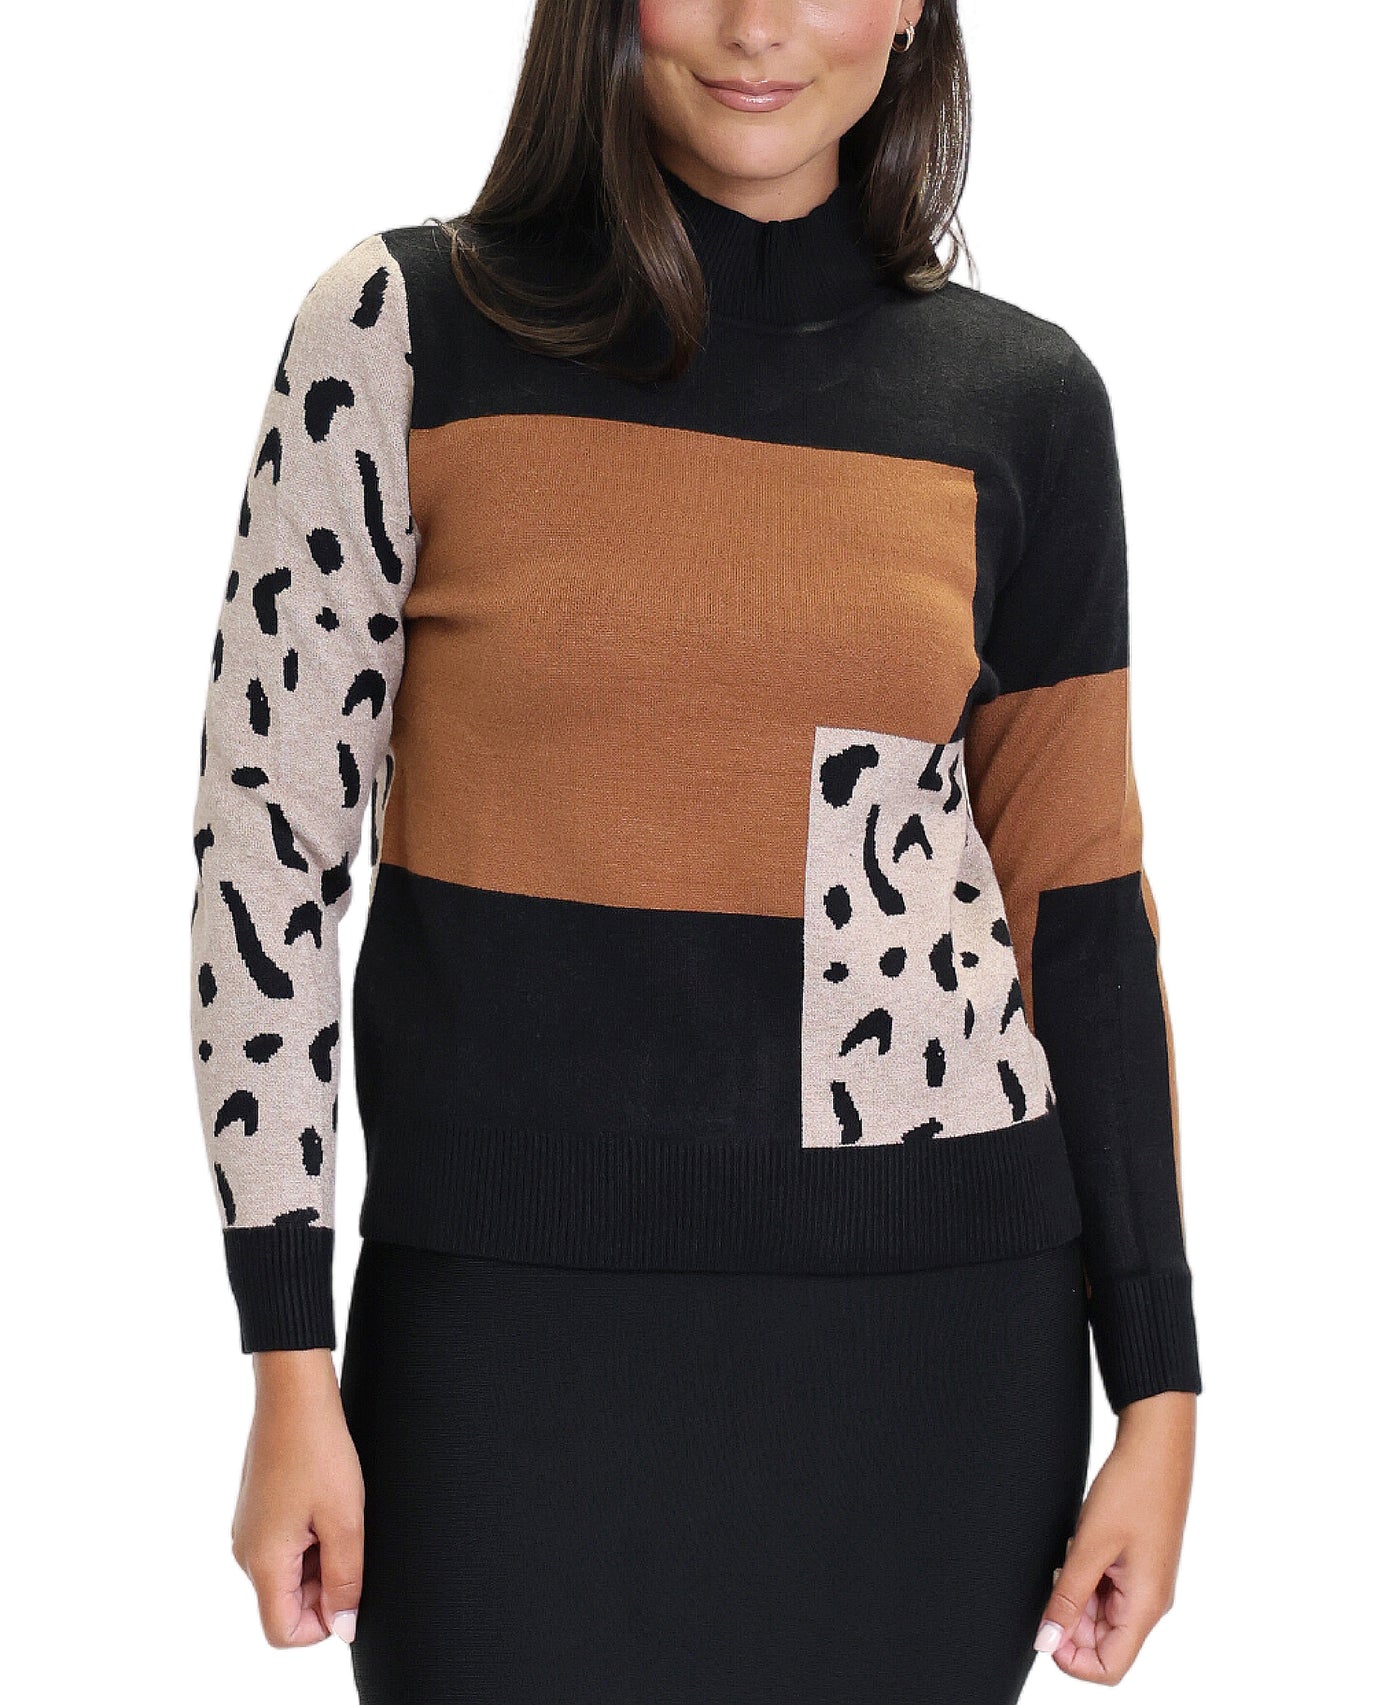 Colorblock Sweater w/ Animal Print image 1